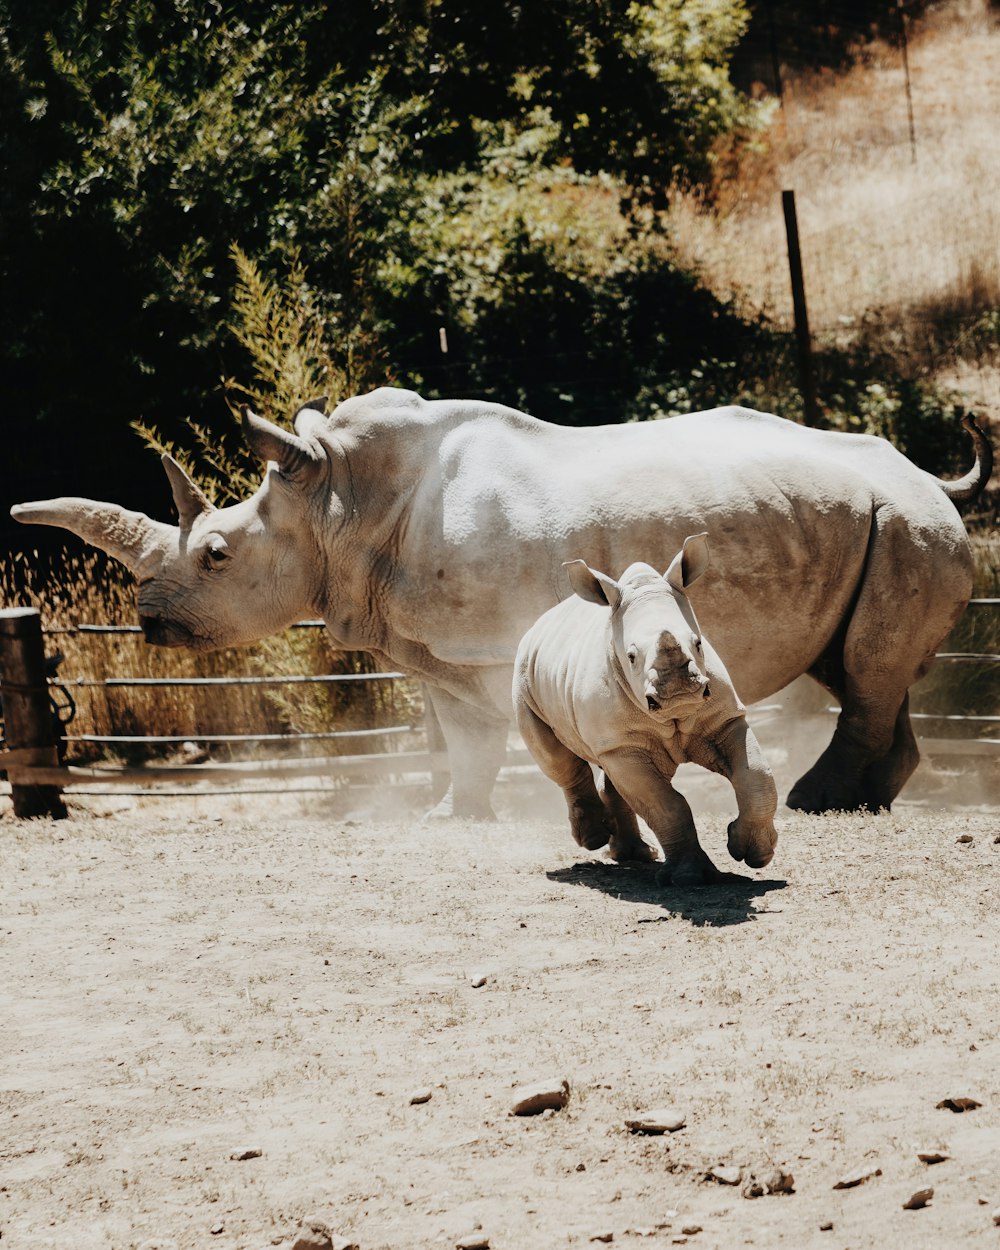 a rhino and a rhinoceros in a fenced in area